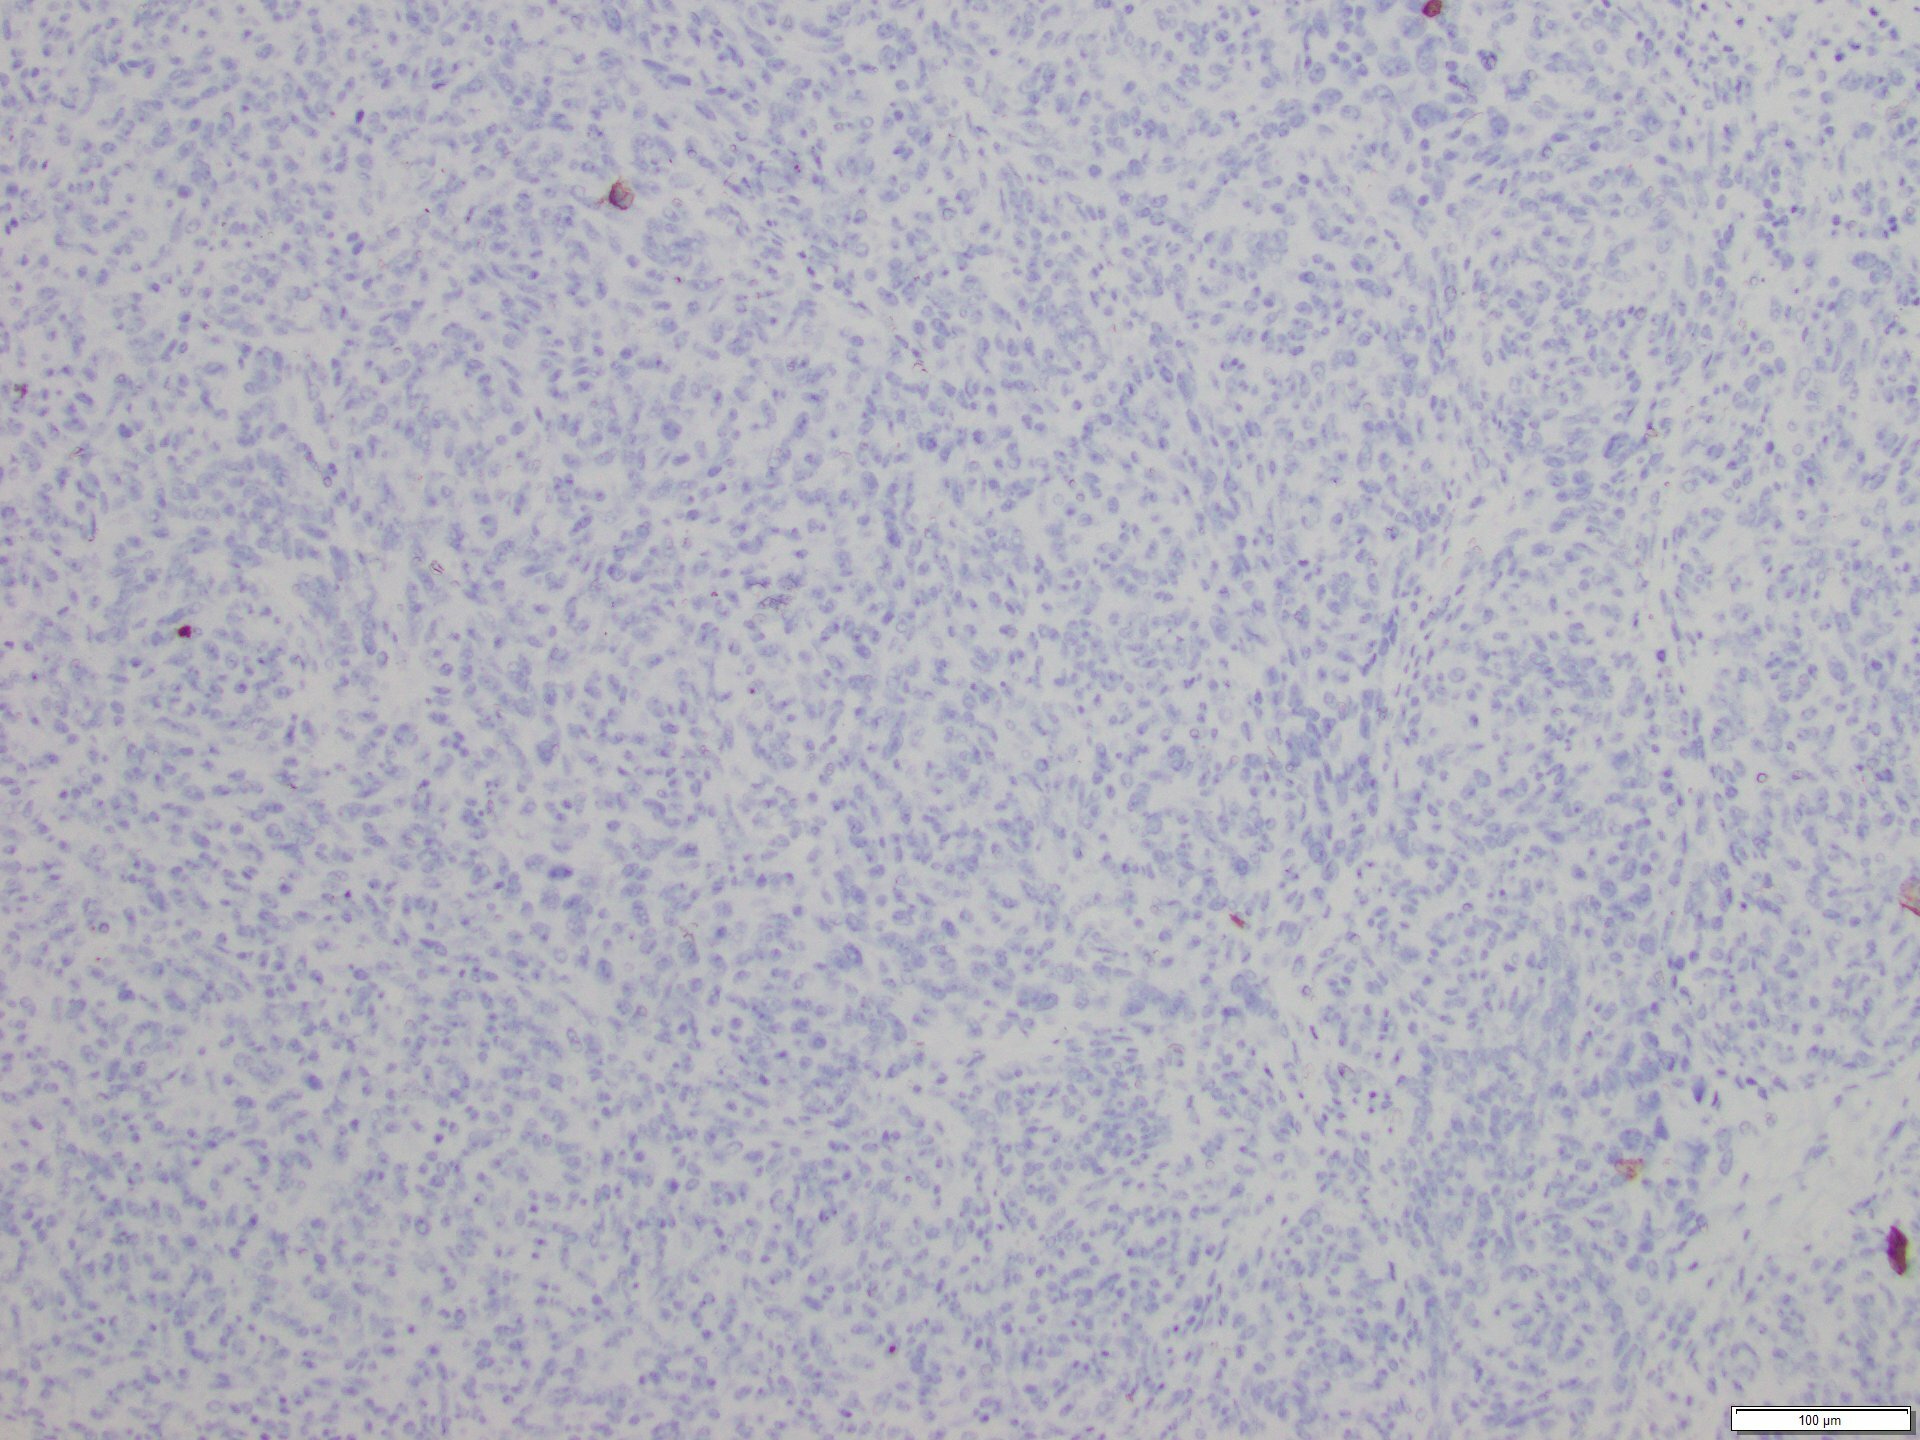 Figure 6. Negative pan-cytokeratinimmunohistochemical staining.